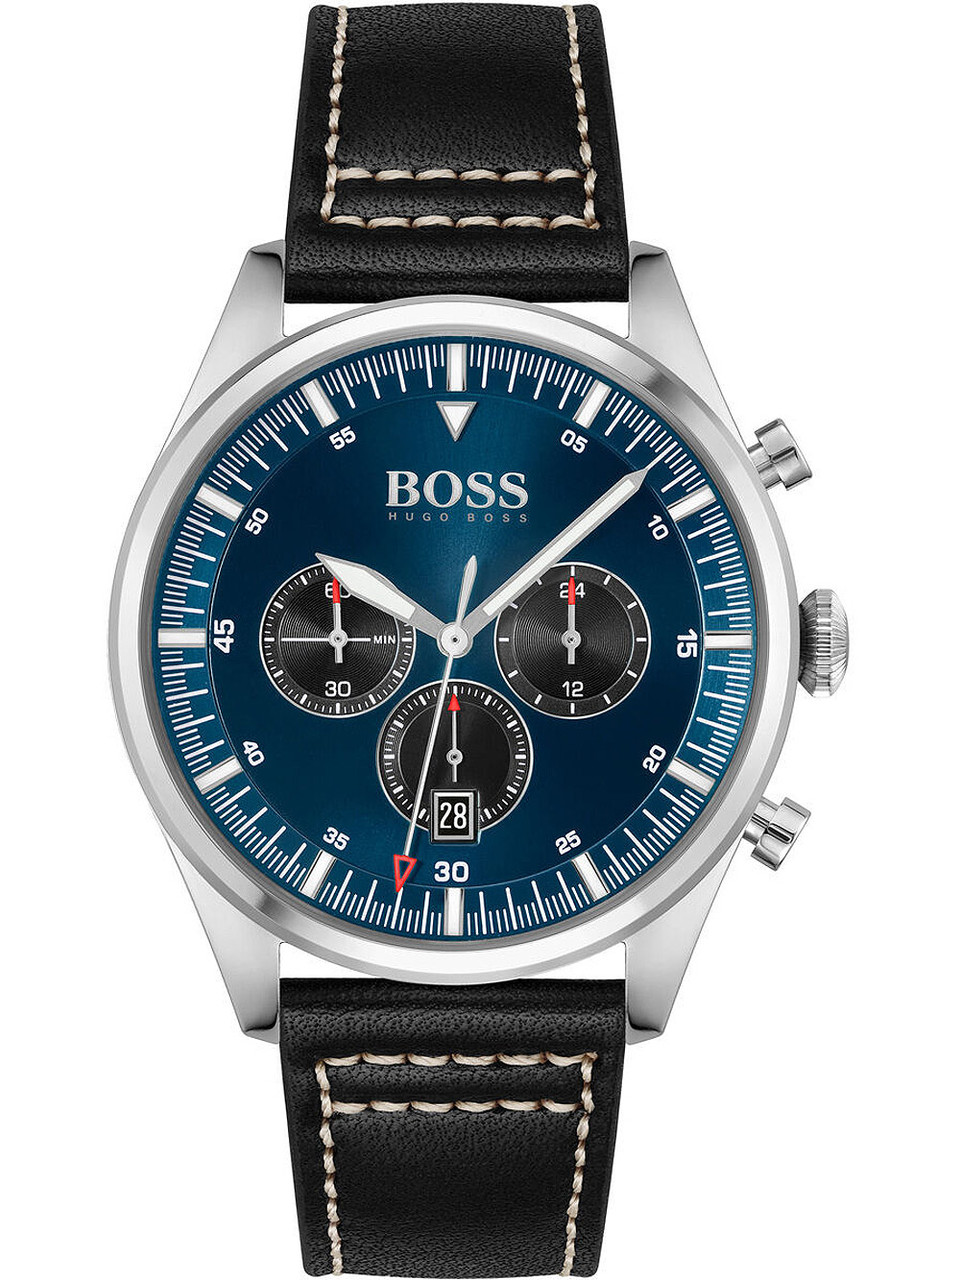 Hugo Boss 1513866 Pioneer chrono 44mm 5ATM - owlica | Genuine Watches